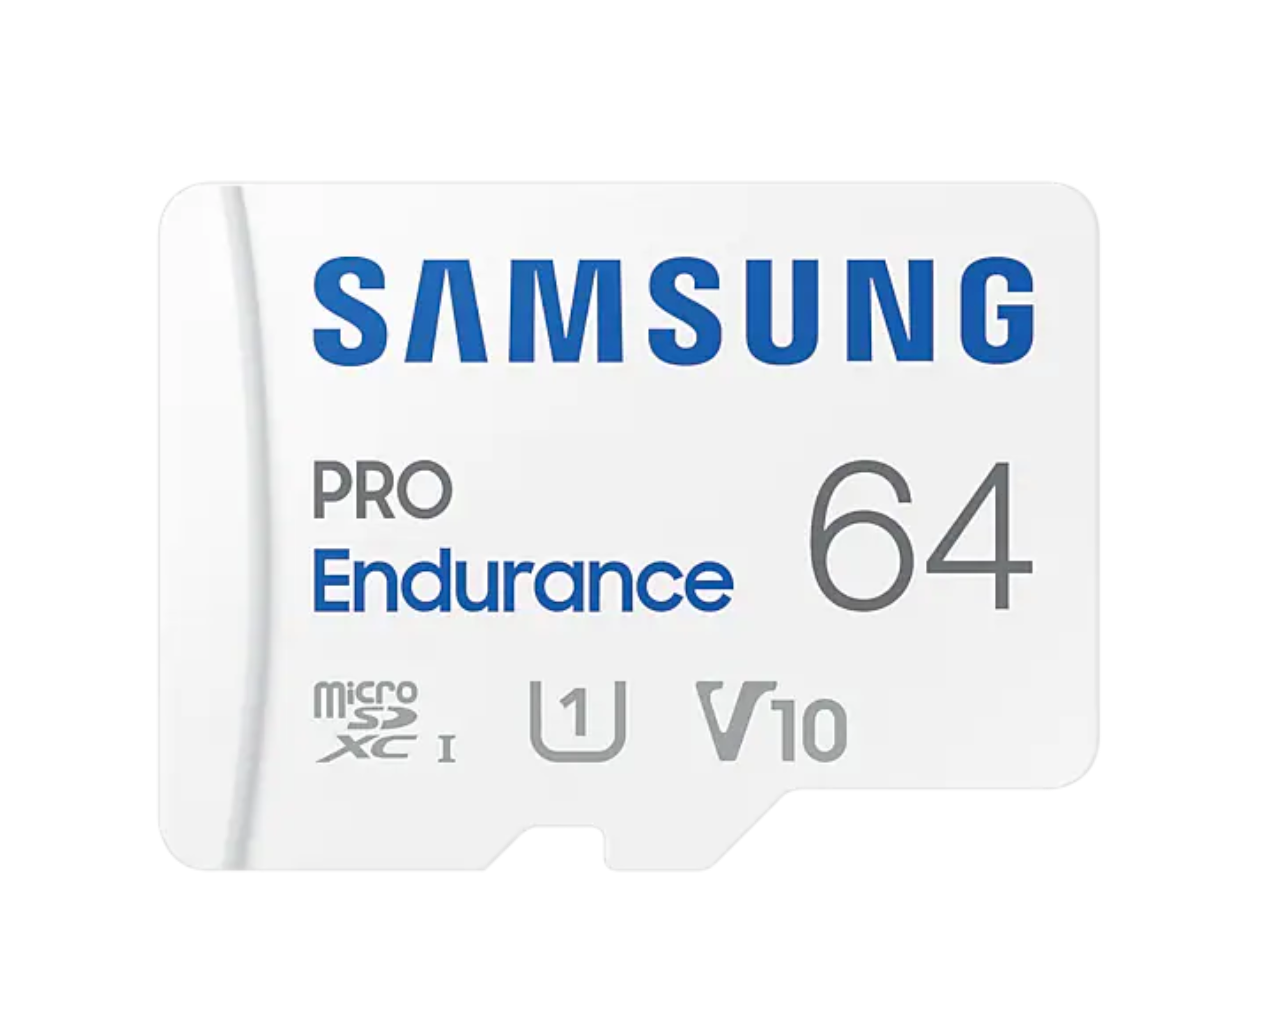 Samsung Endurance Pro 64GB microSD Card